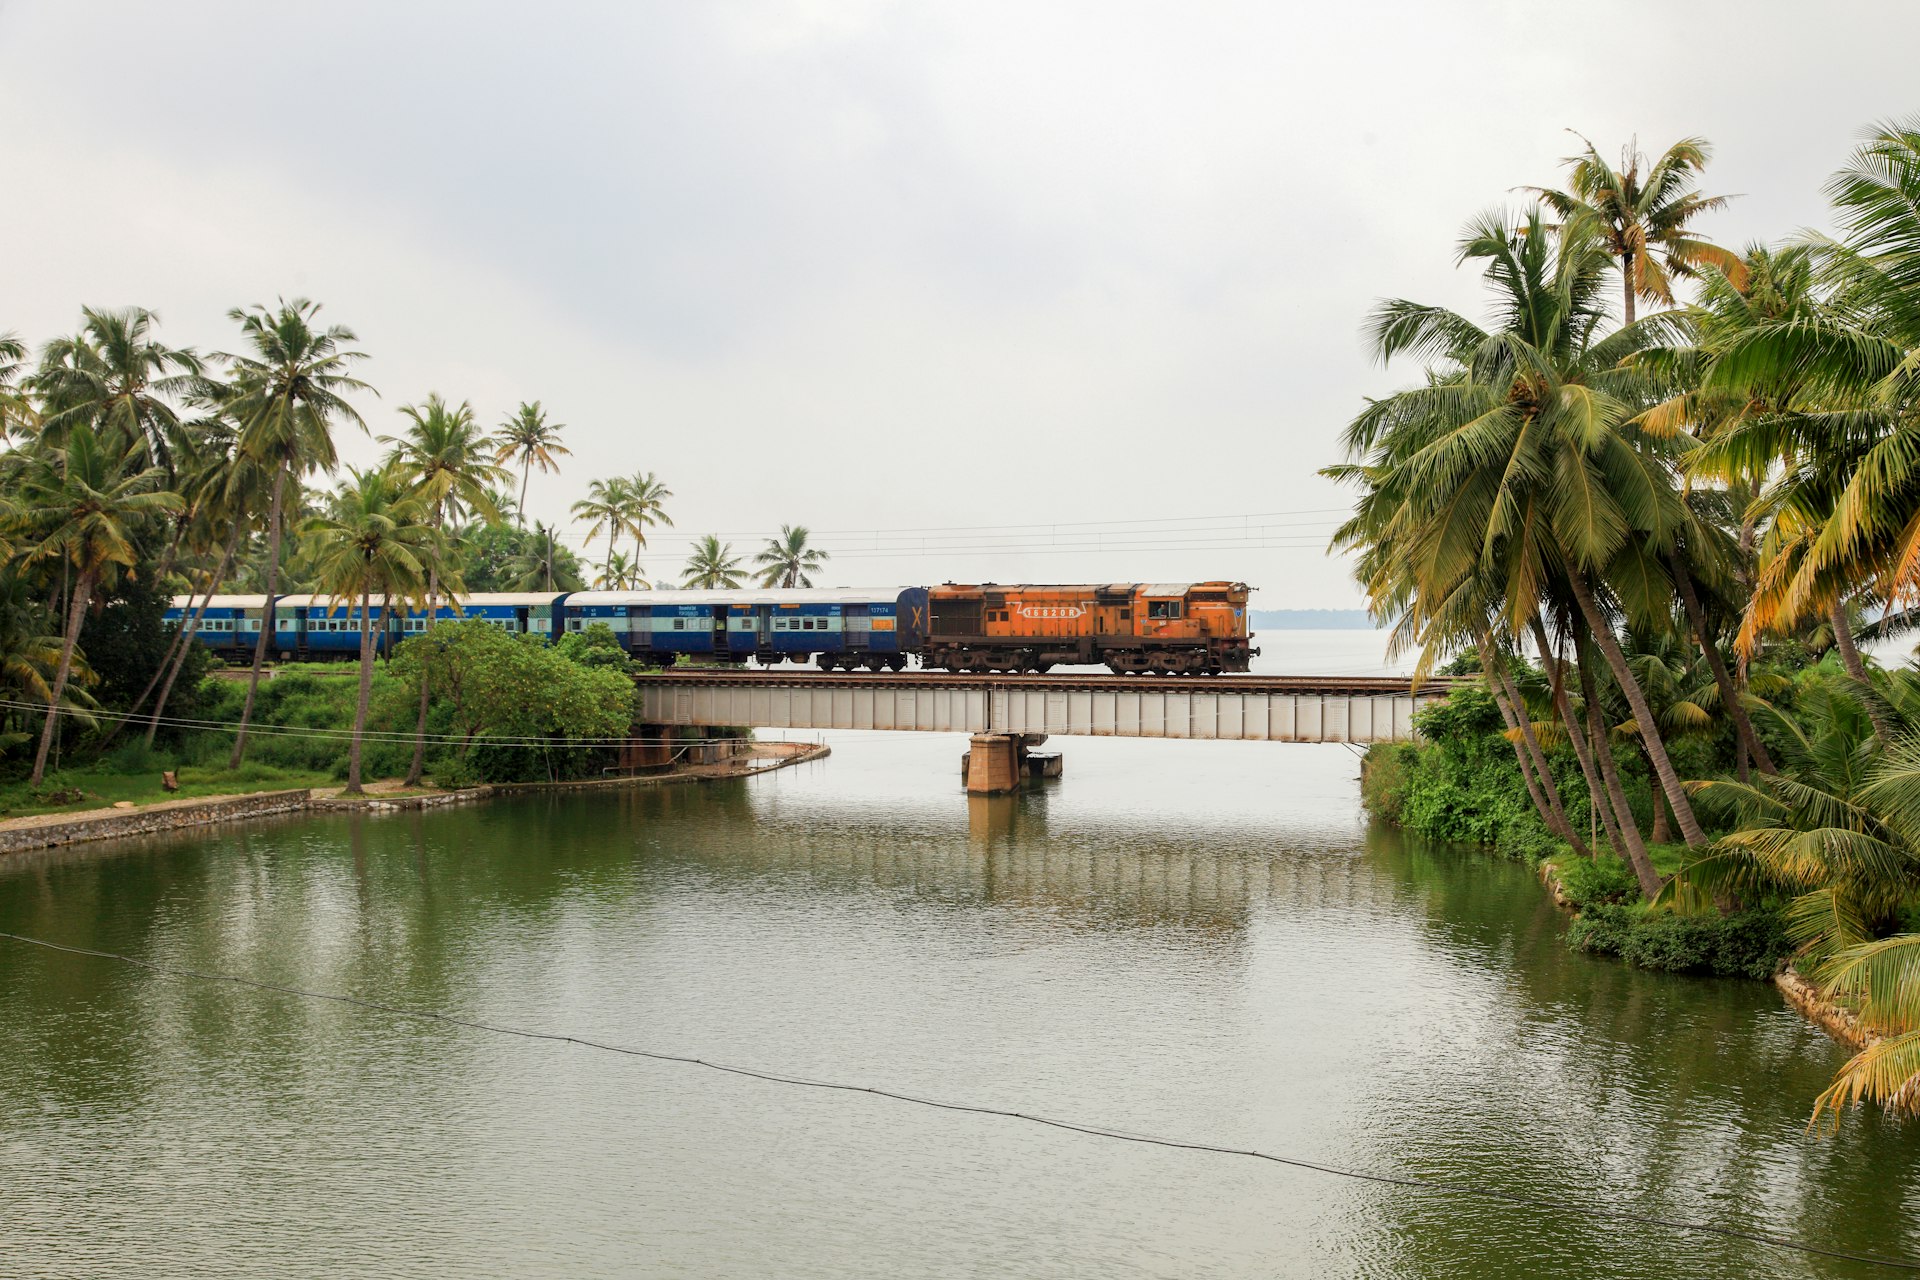 A train passes through a railway bridge in Manroe Island on in Kollam, Kerala, India